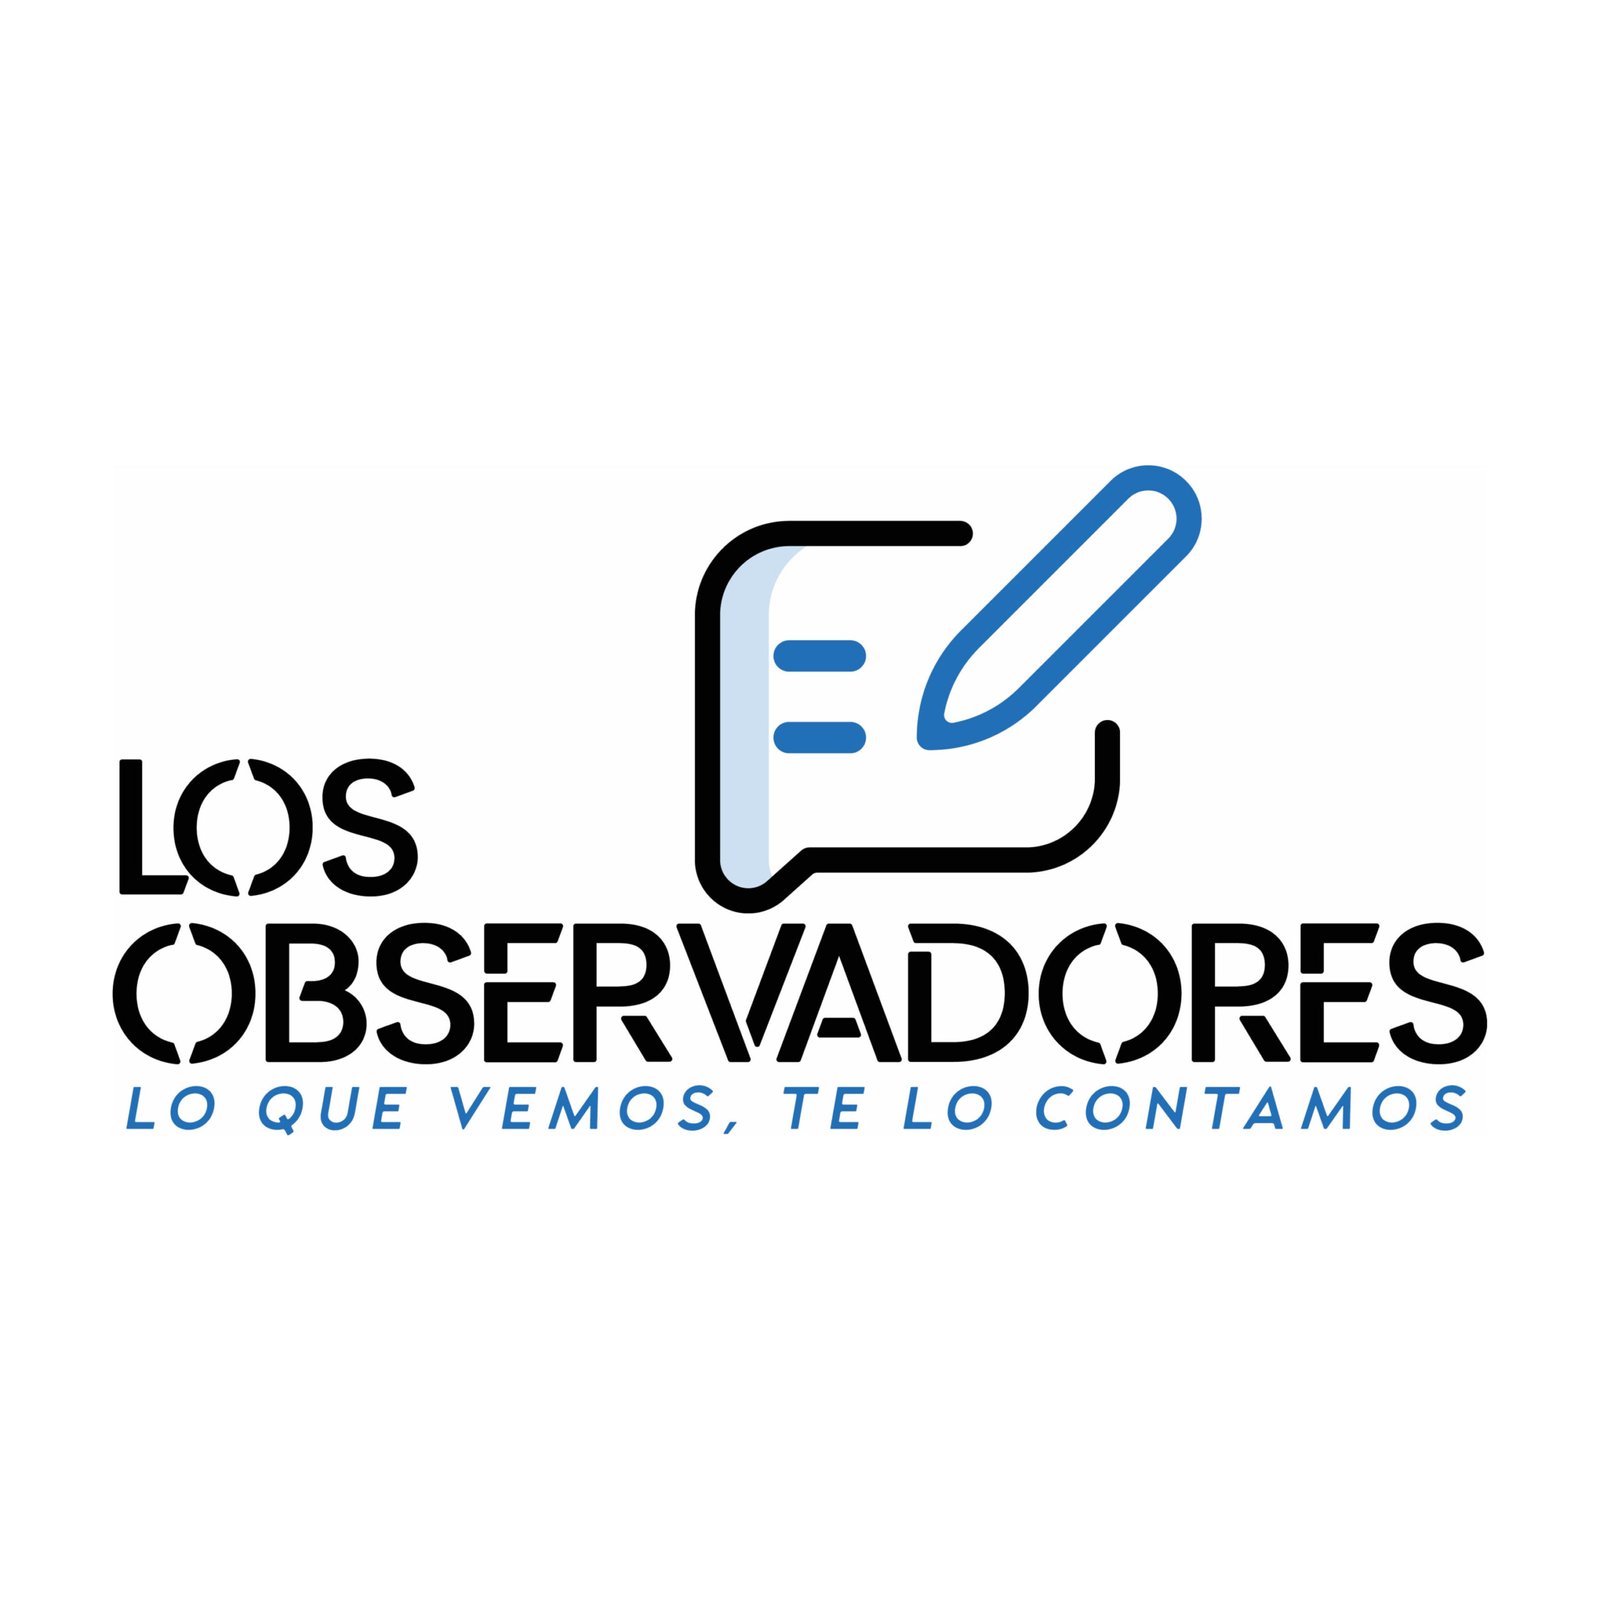 (c) Losobservadores.com